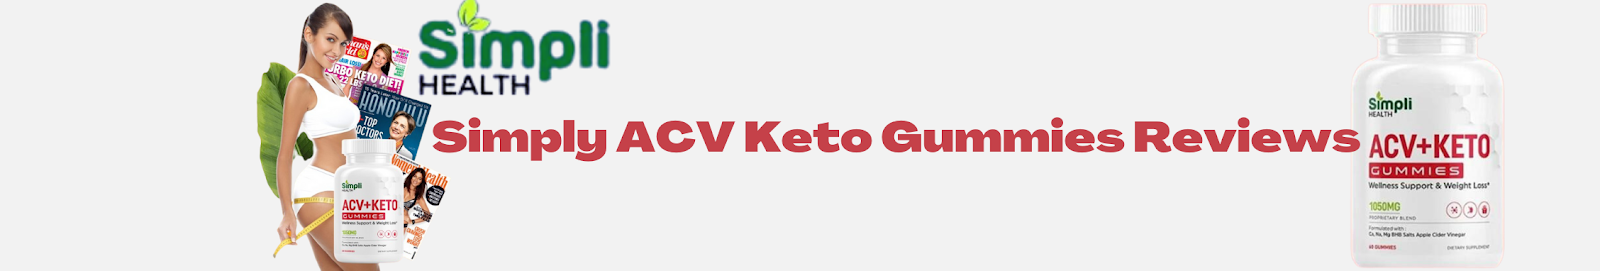 Simply Health ACV Keto Gummies Reviews - Does Simpli ACV Keto Gummies Really Work